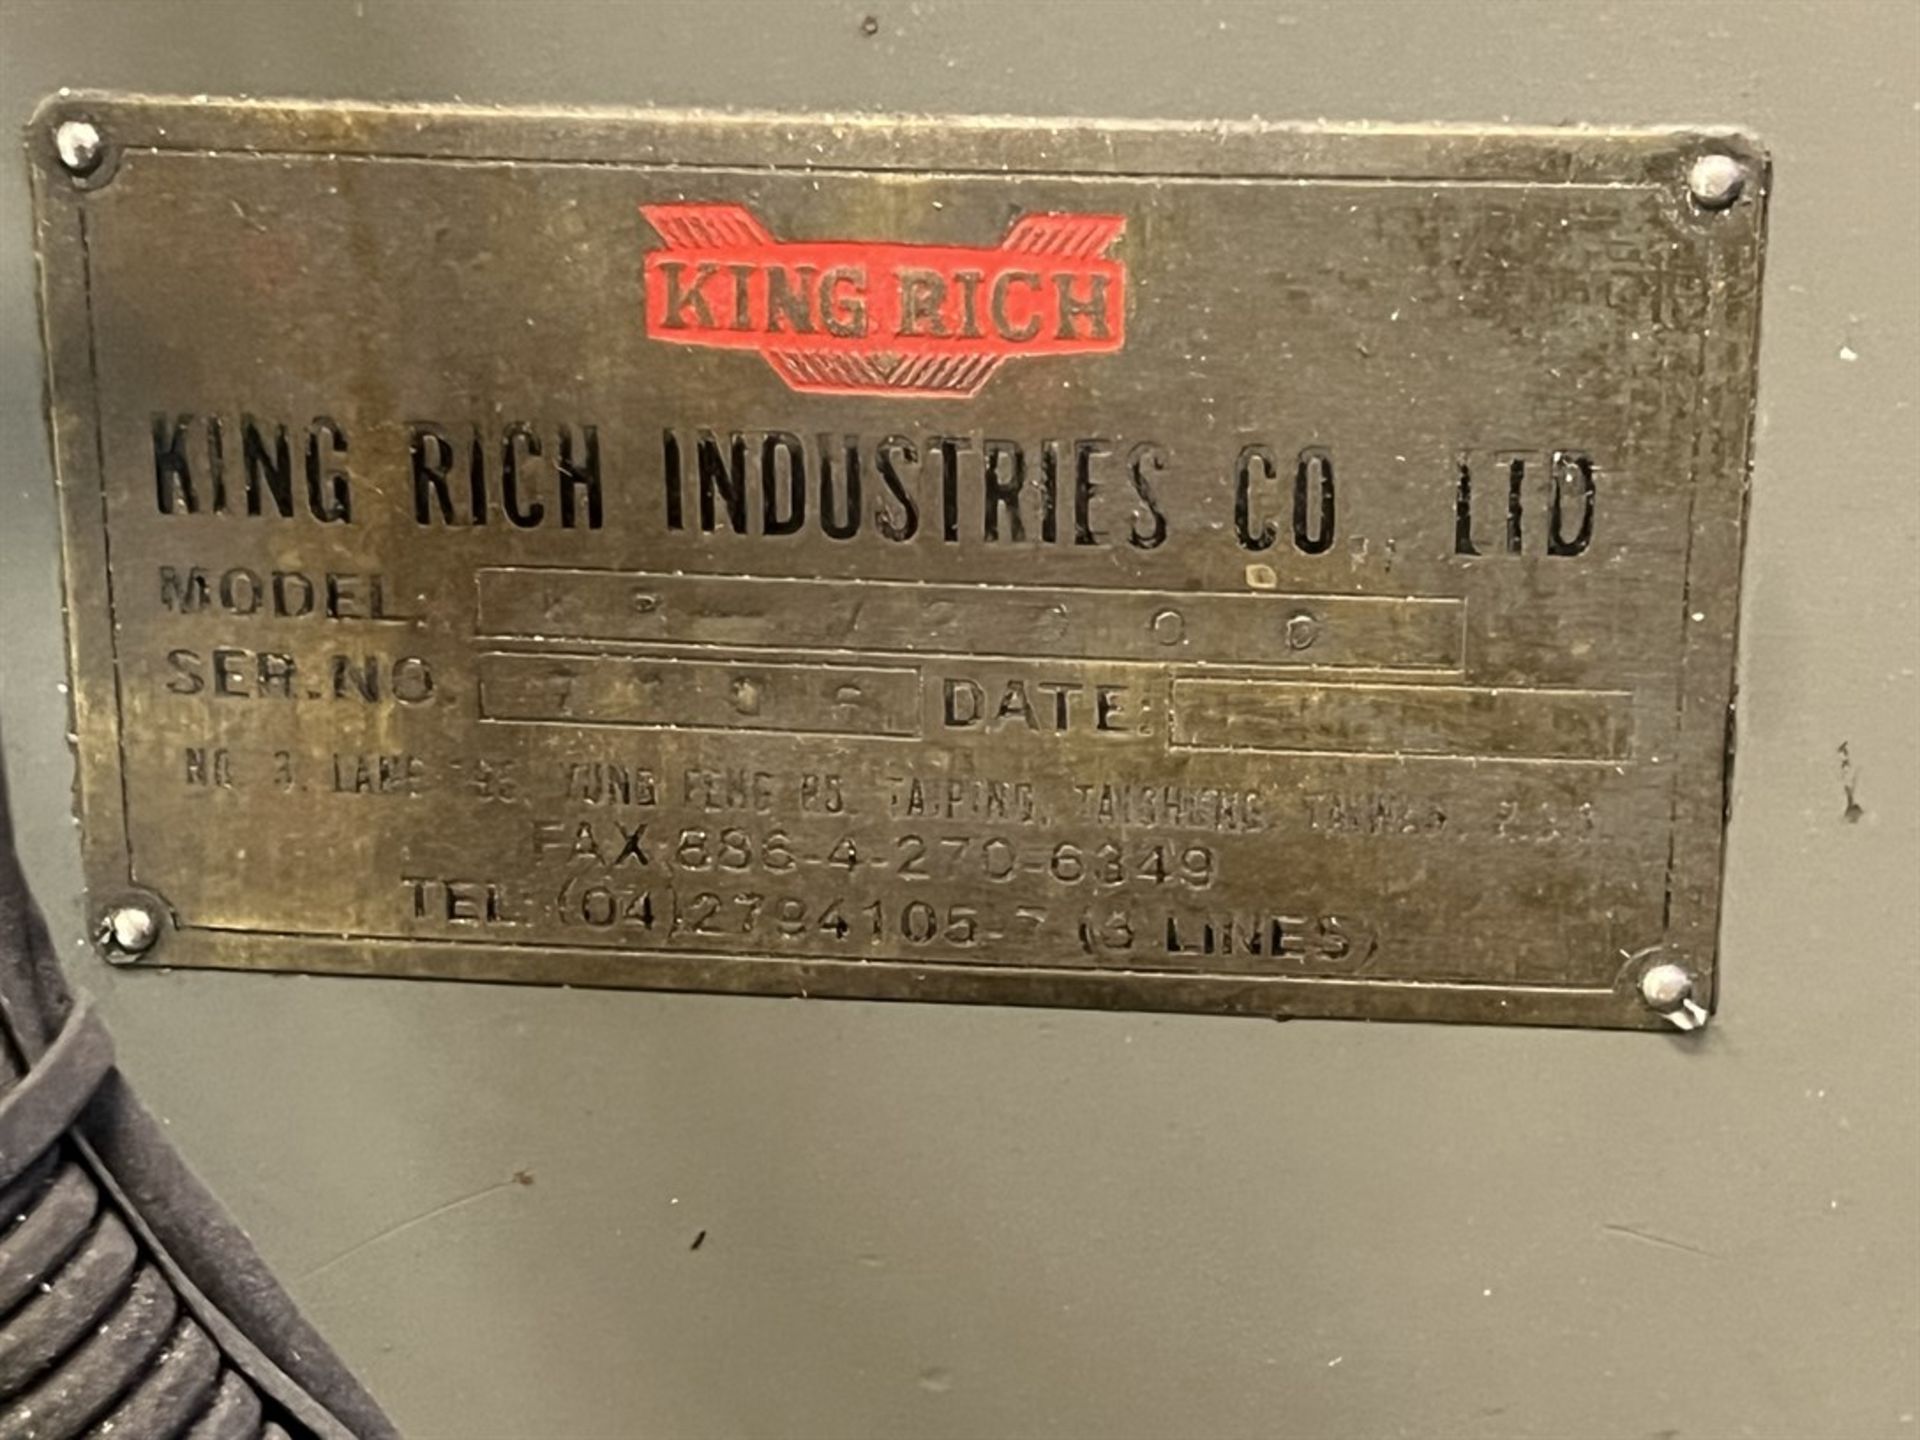 2004 KING RICH KPV2000 Milling Machine, s/n 7106, 10" x 50" Table, 60-4200 RPM, w/ PROTO TRAK - Image 7 of 7